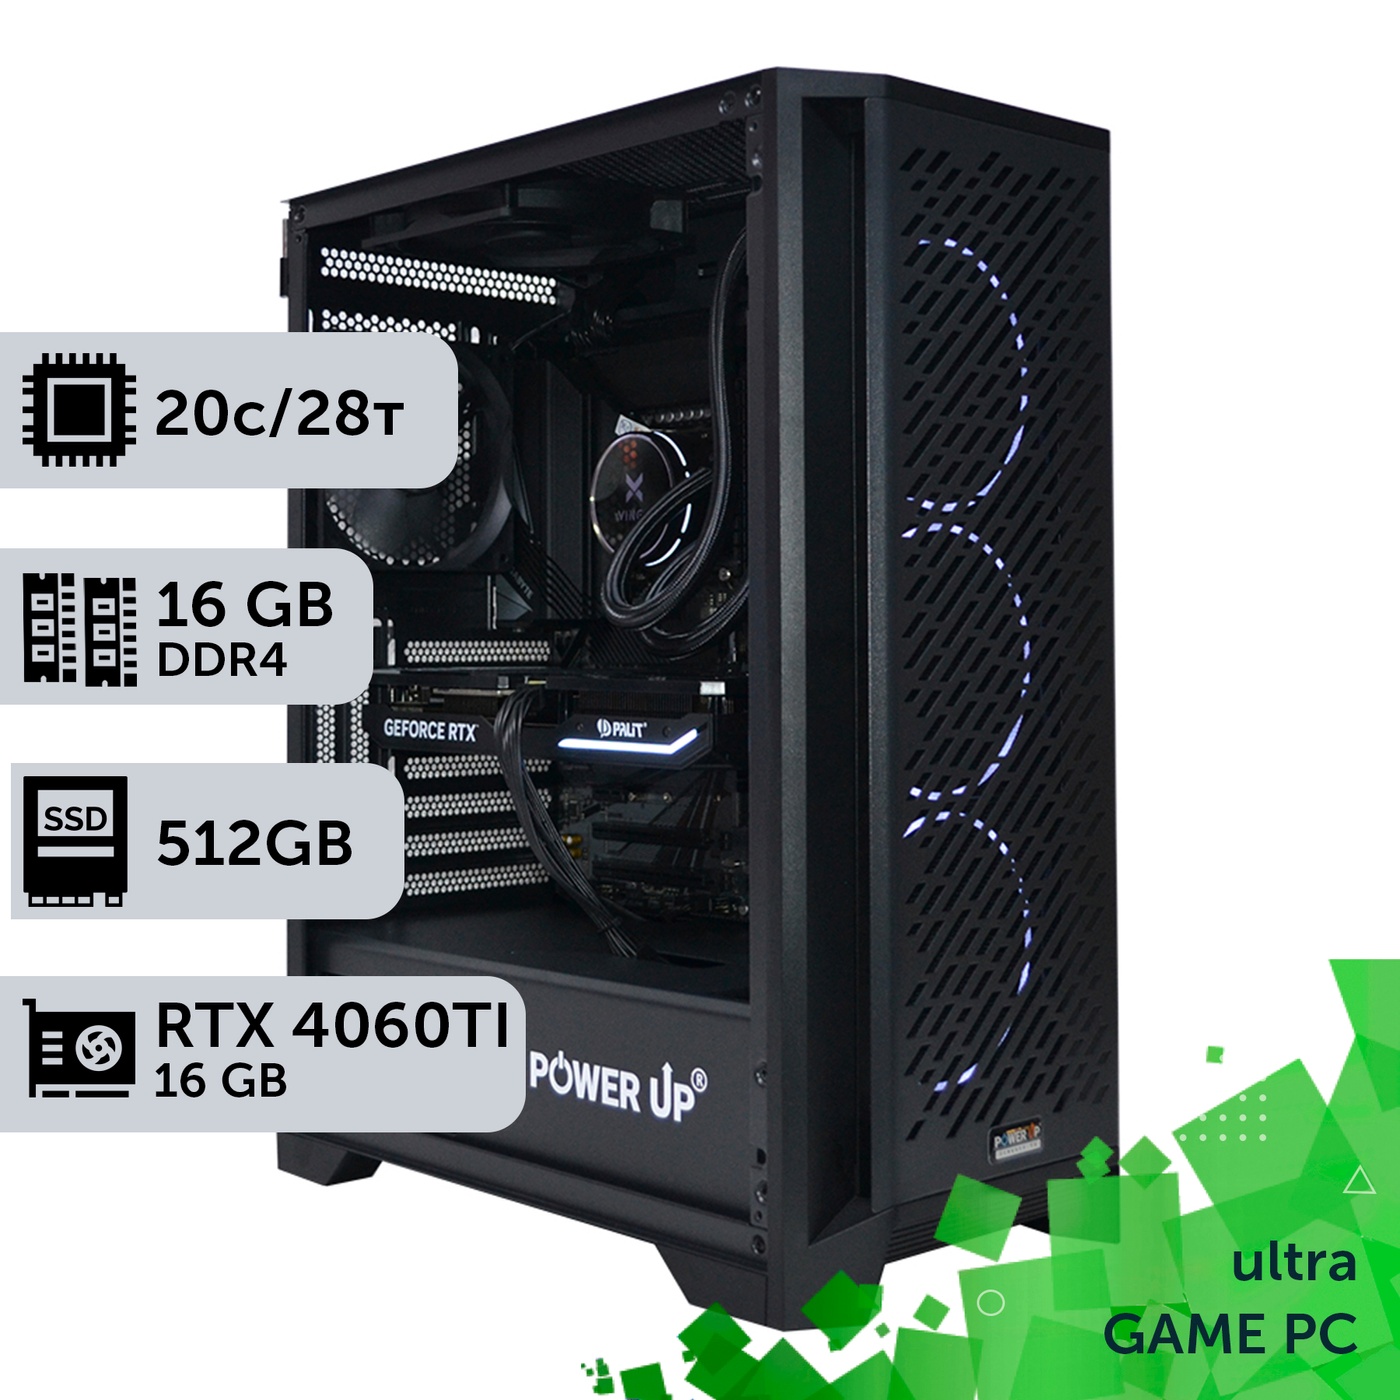 Ігровий комп'ютер GamePC Ultra #257 Core i7 14700K/16GB/HDD 1TB/SSD 512GB/GeForce RTX 4060Ti 16GB